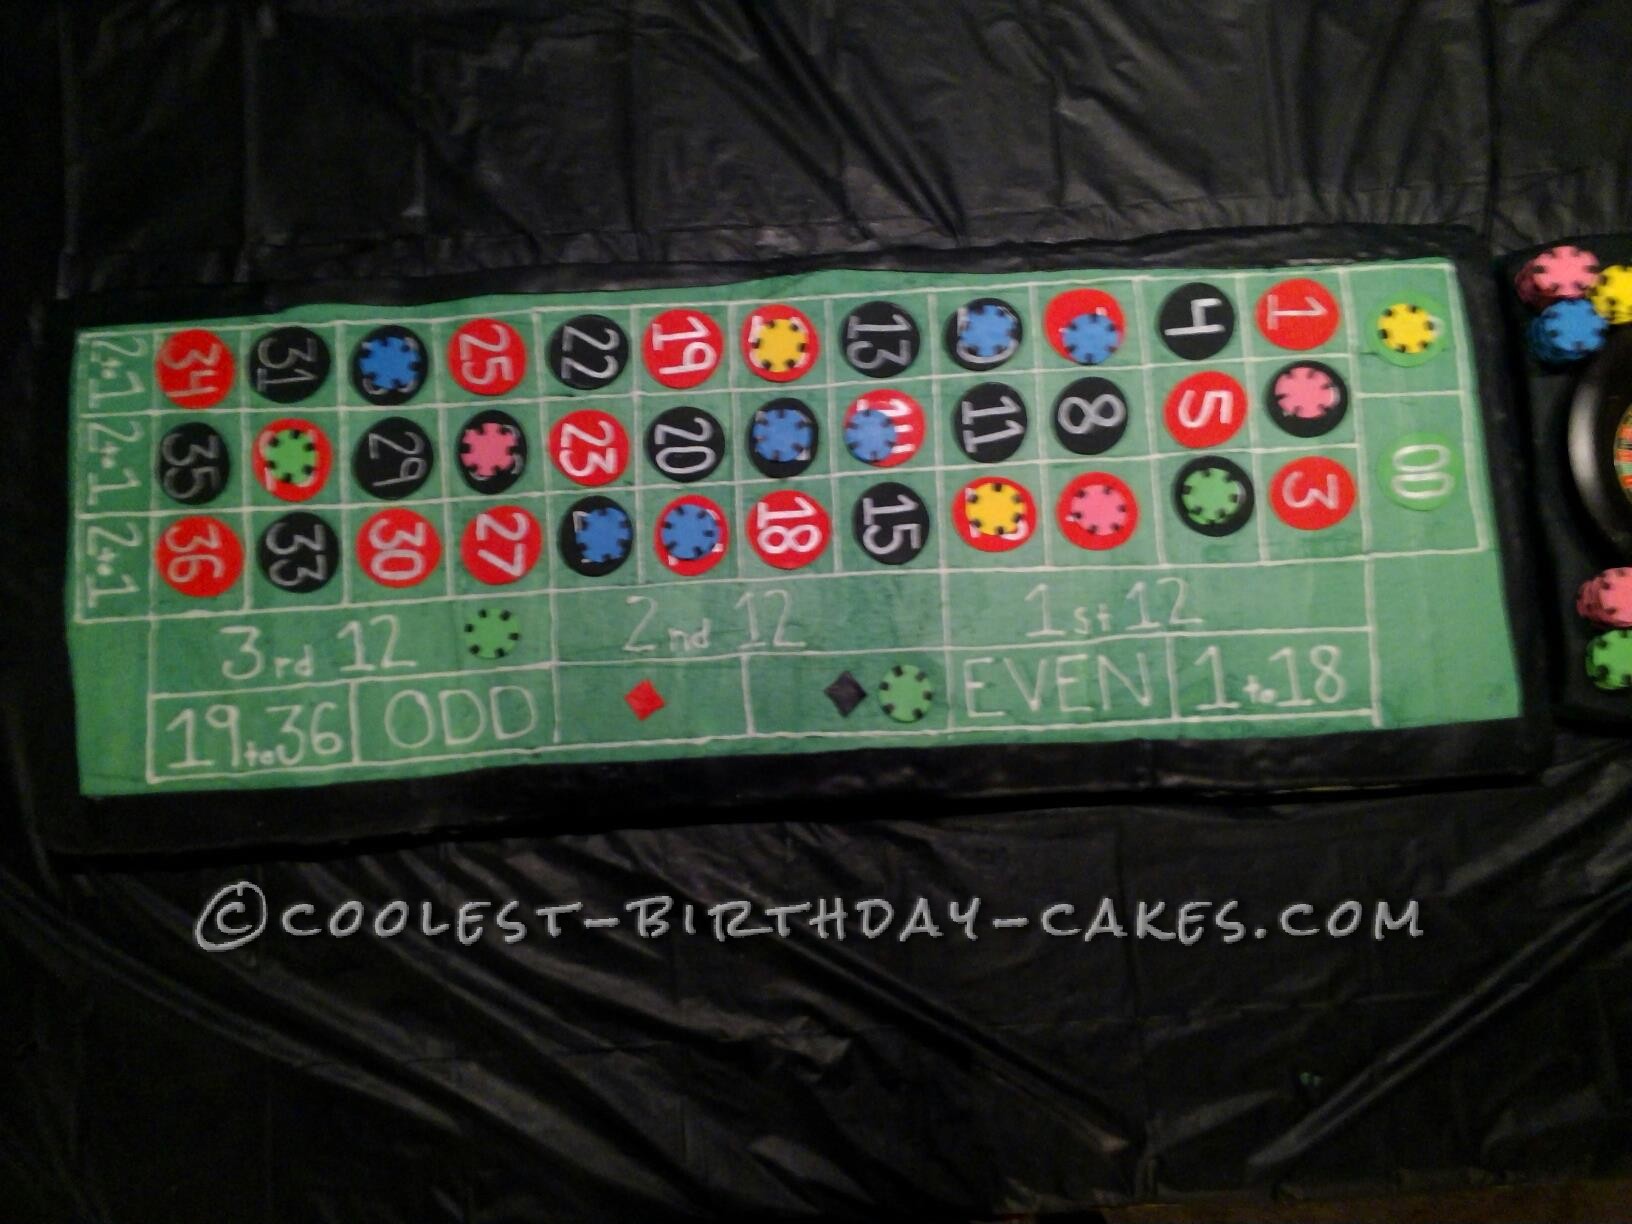 Coolest Roulette Birthday Cake - 5 Feet Long!